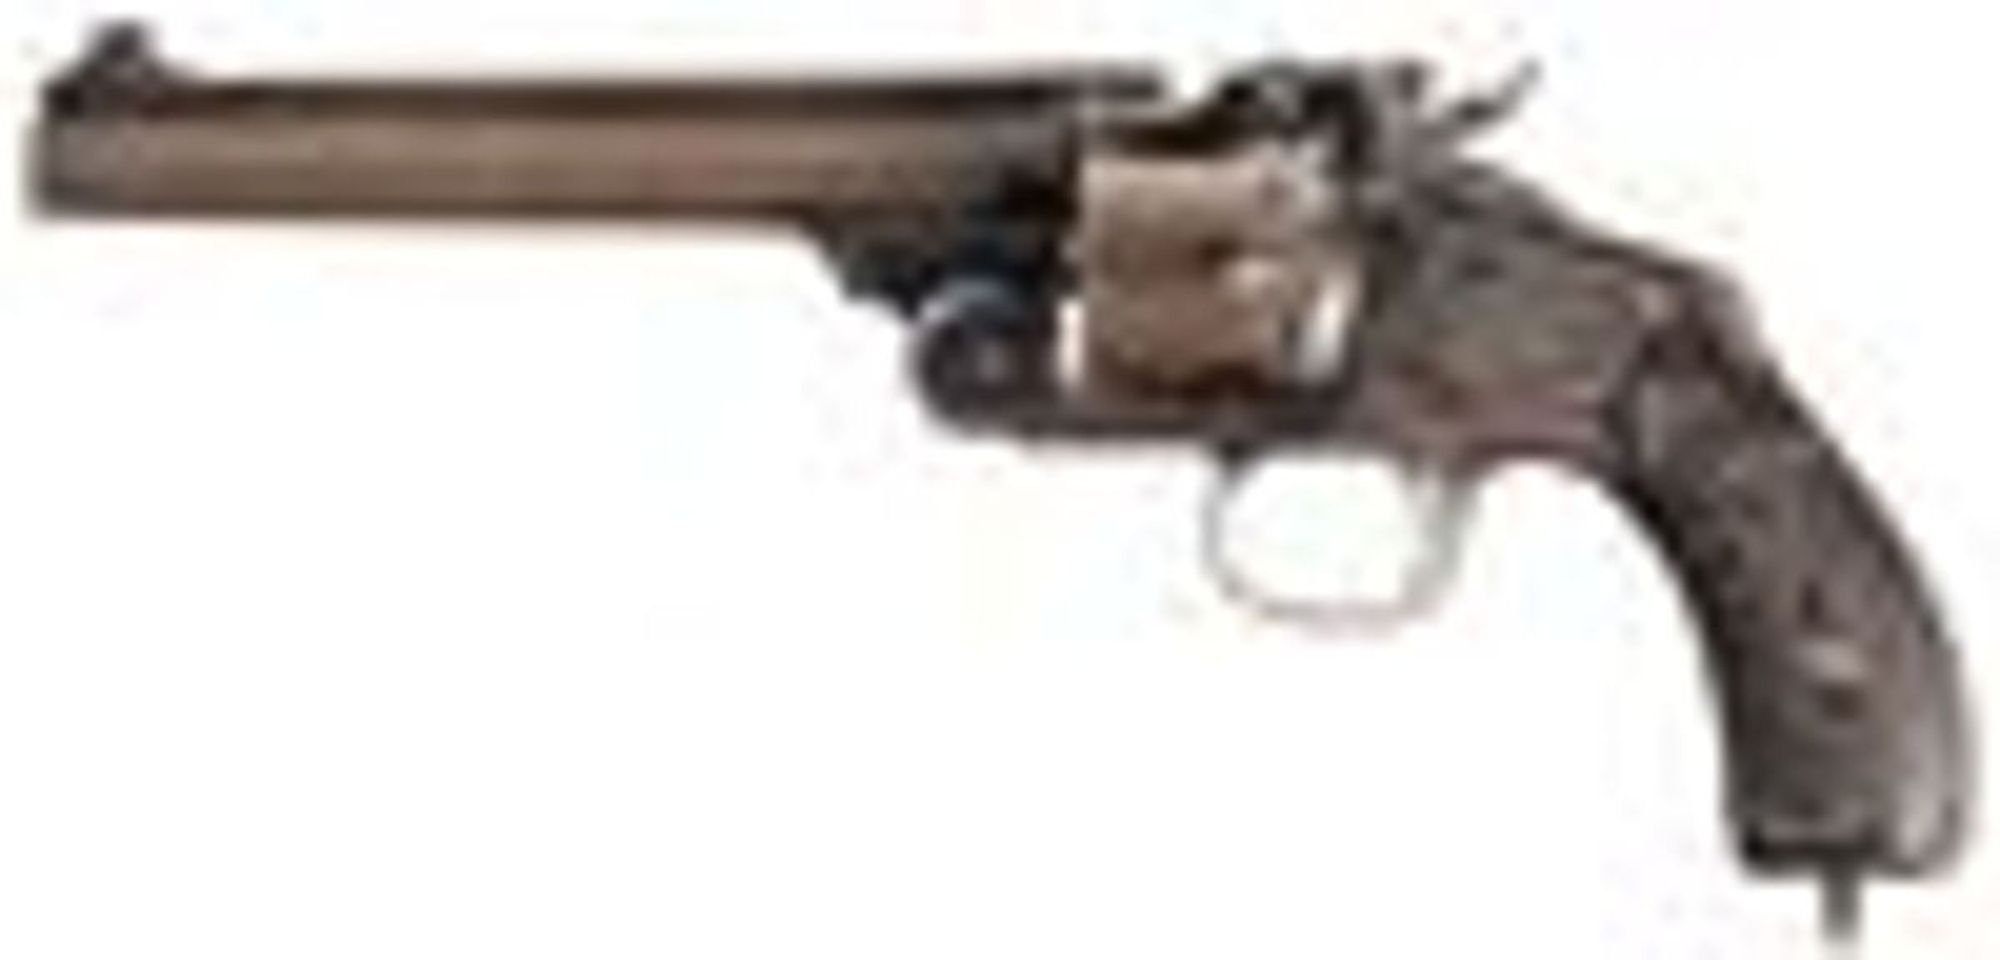 Walter Winans Smith & Wesson No. 3 revolver